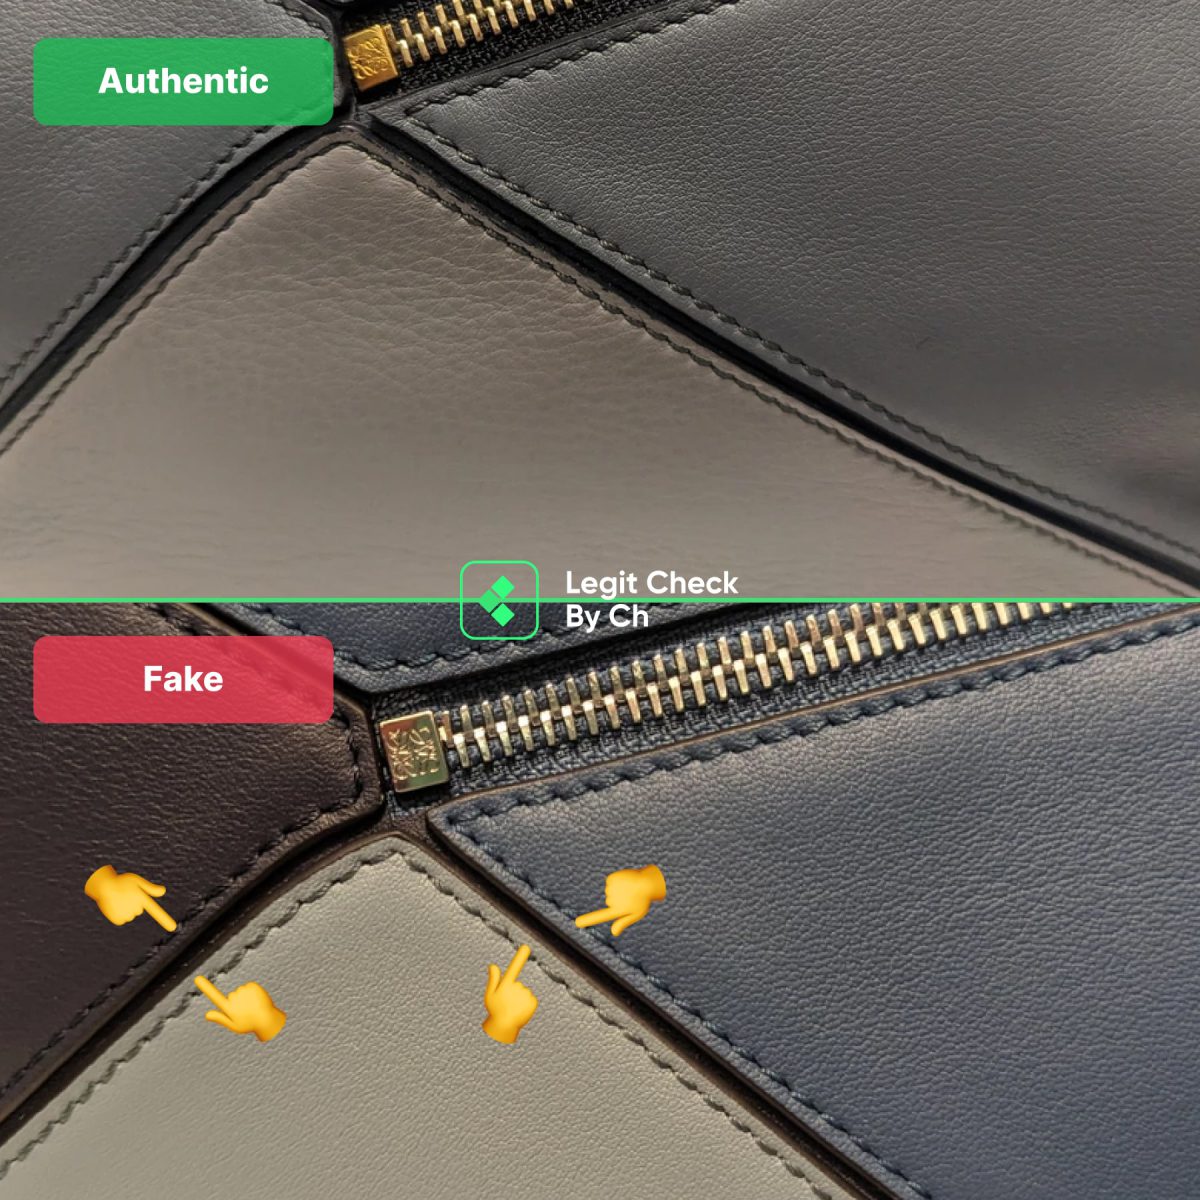 Loewe Bag Fake Vs Real Leather Fitment